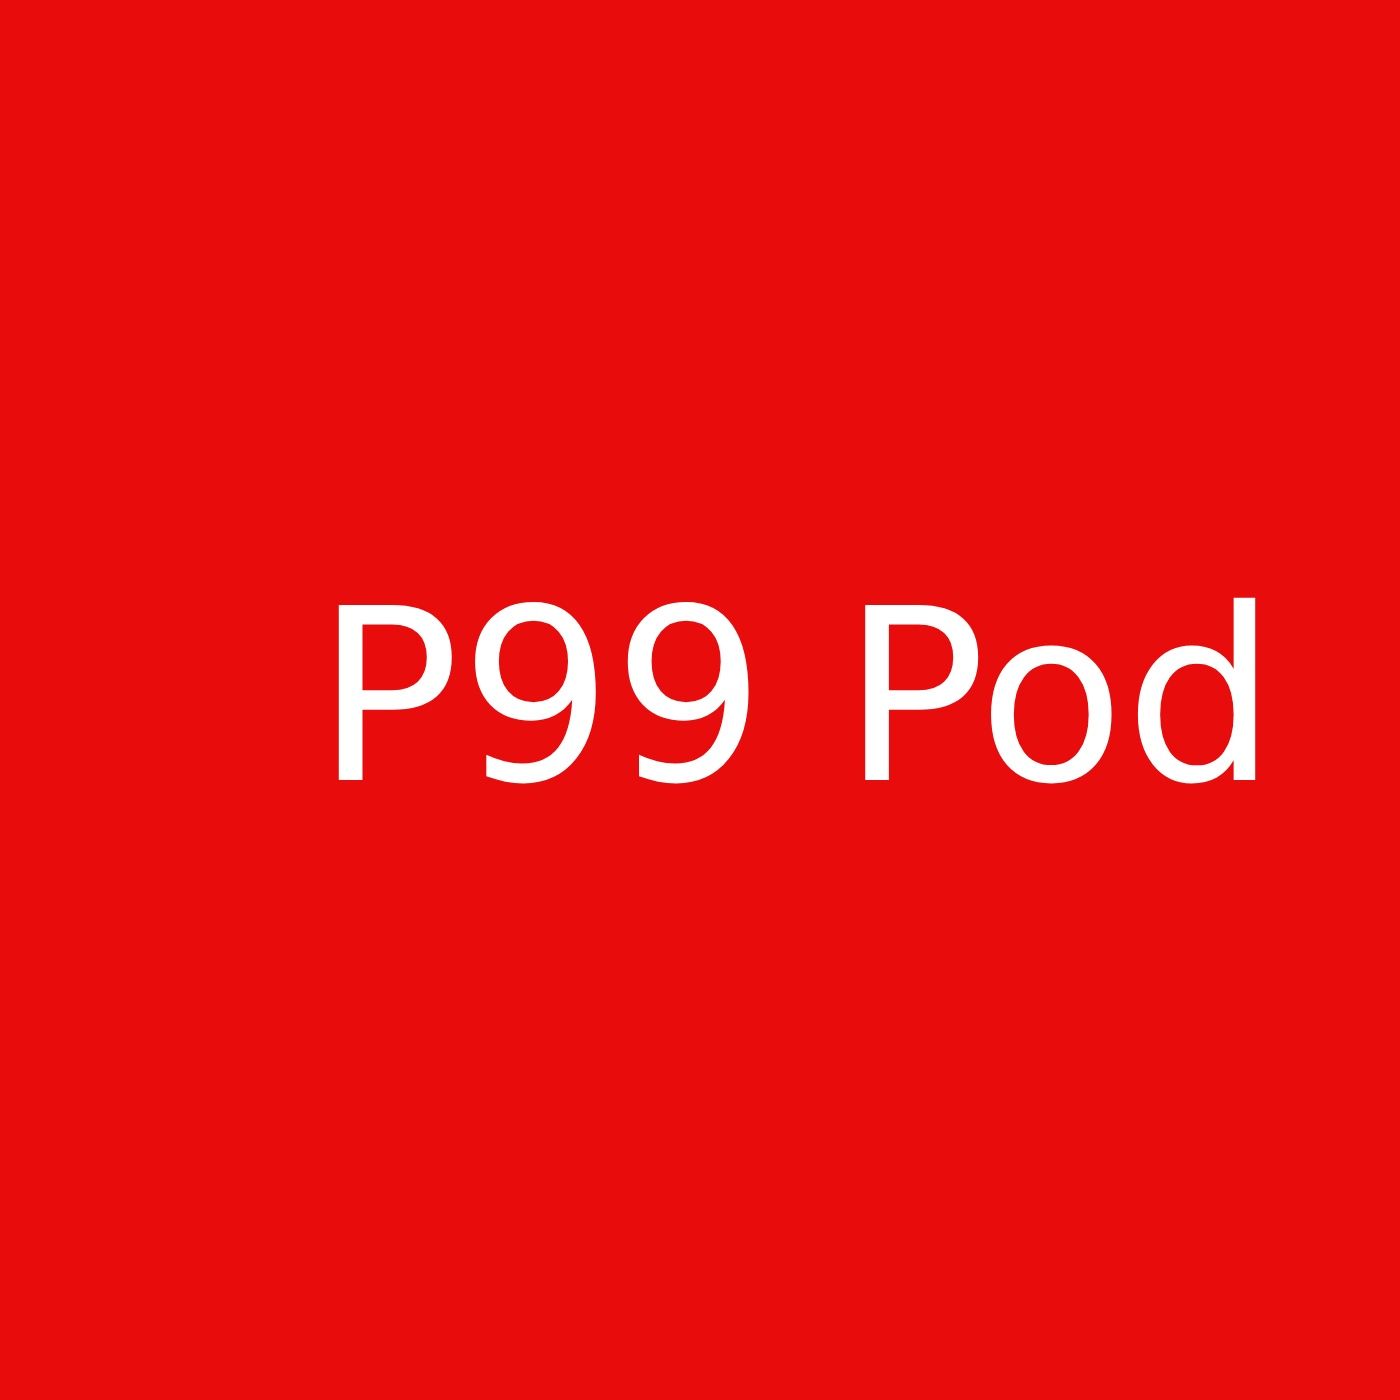 P99 Podcast